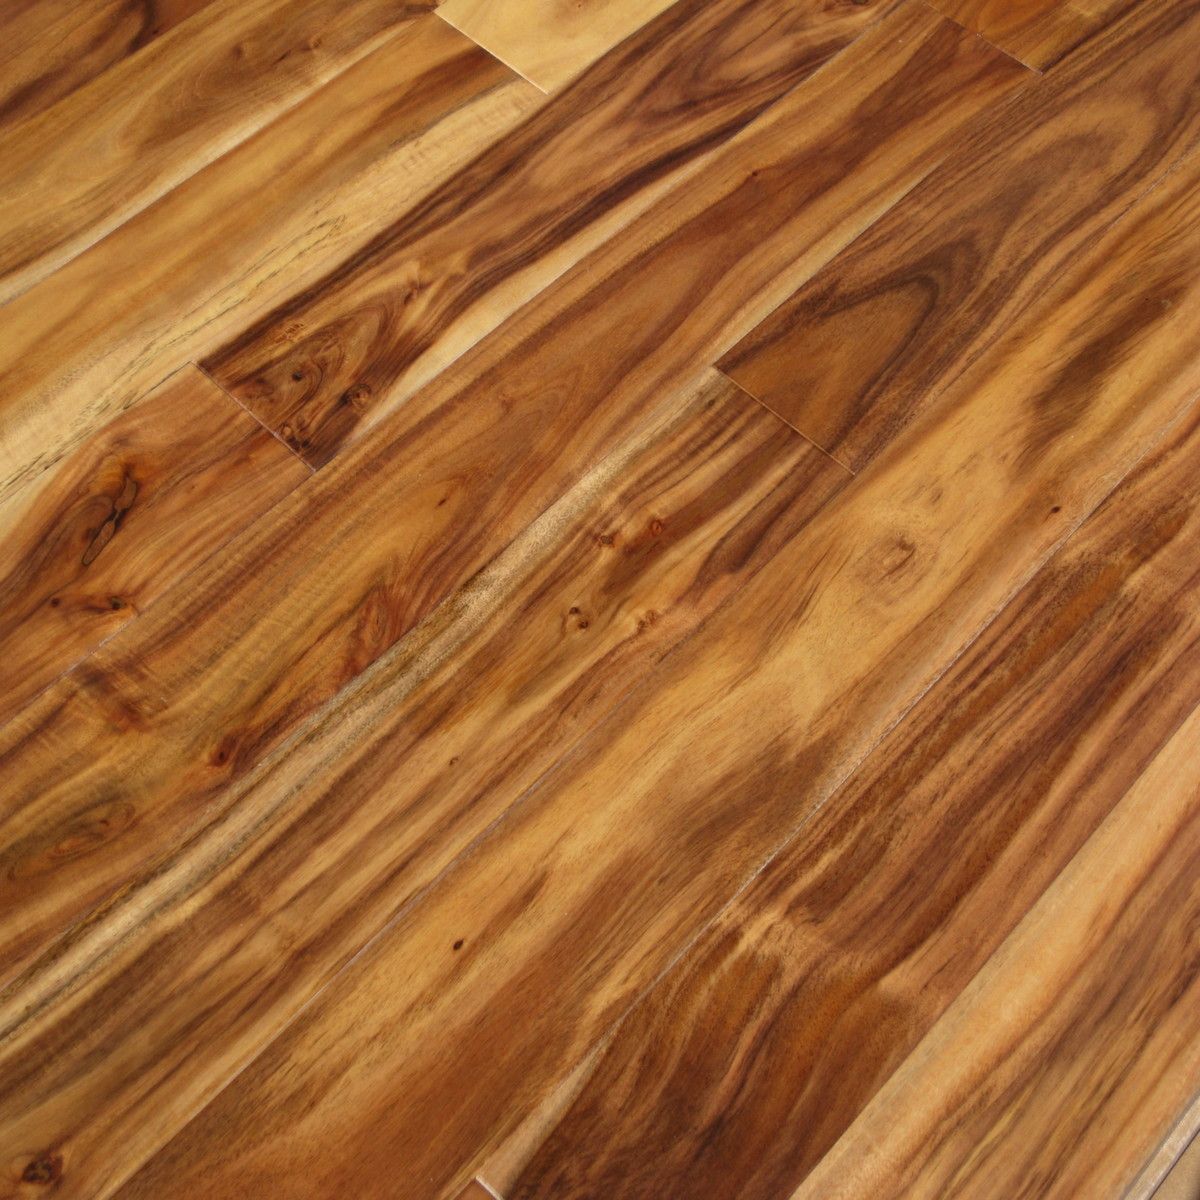 Acacia Wood Flooring Guide Benefits, Is Acacia Wood Good For Flooring